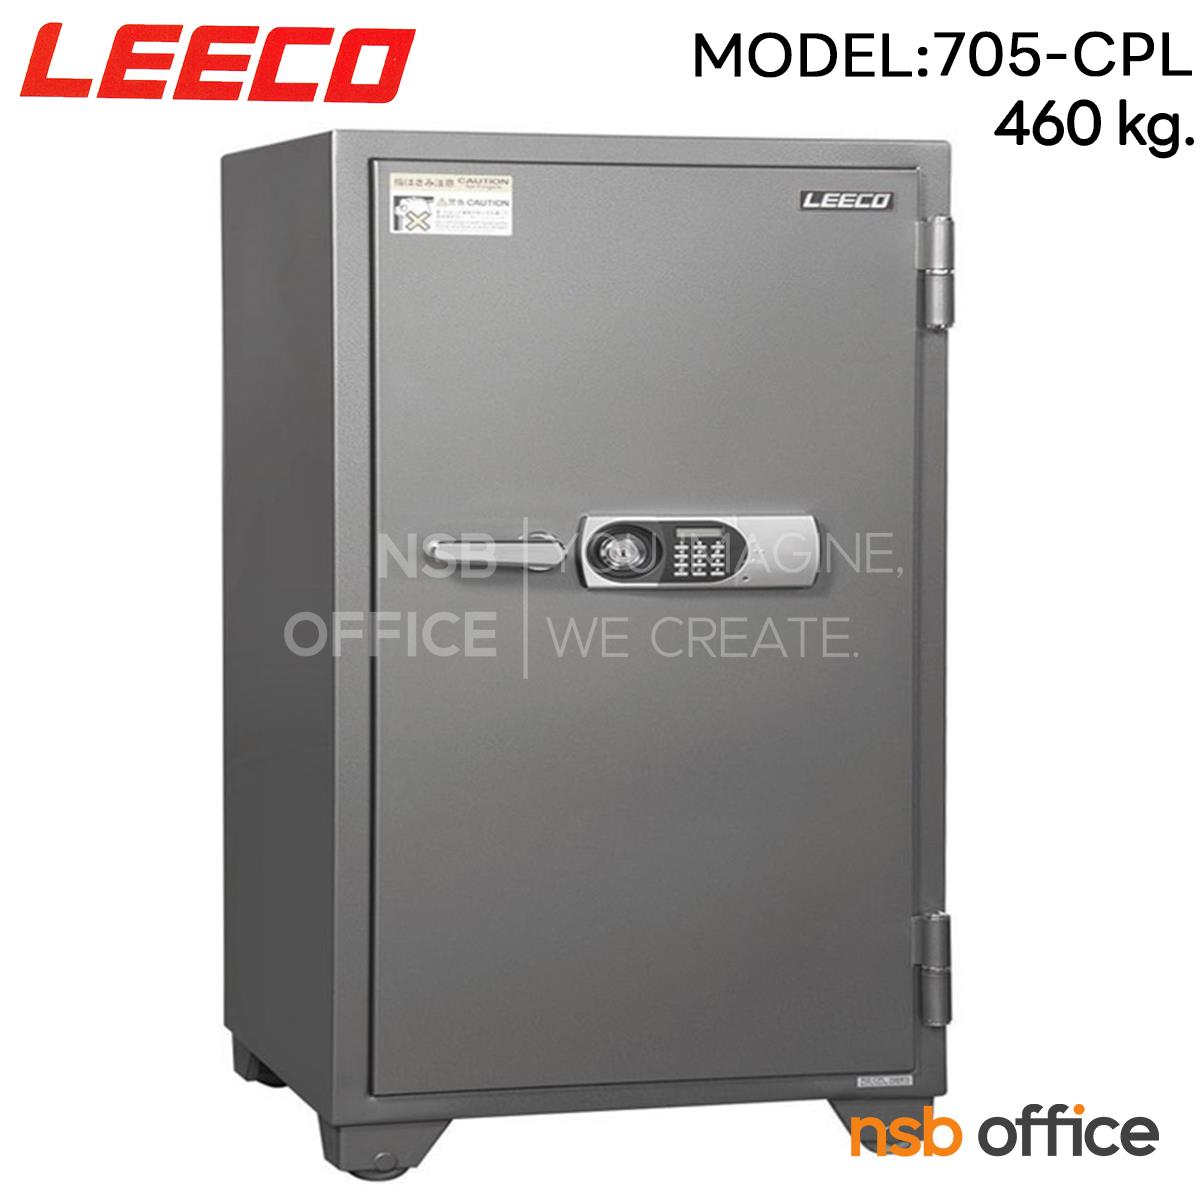 F02A075:ตู้เซฟนิรภัย 460 กก. ลิโก้ รุ่น Leeco-705-CPL (1 กุญแจ 1 รหัส)   